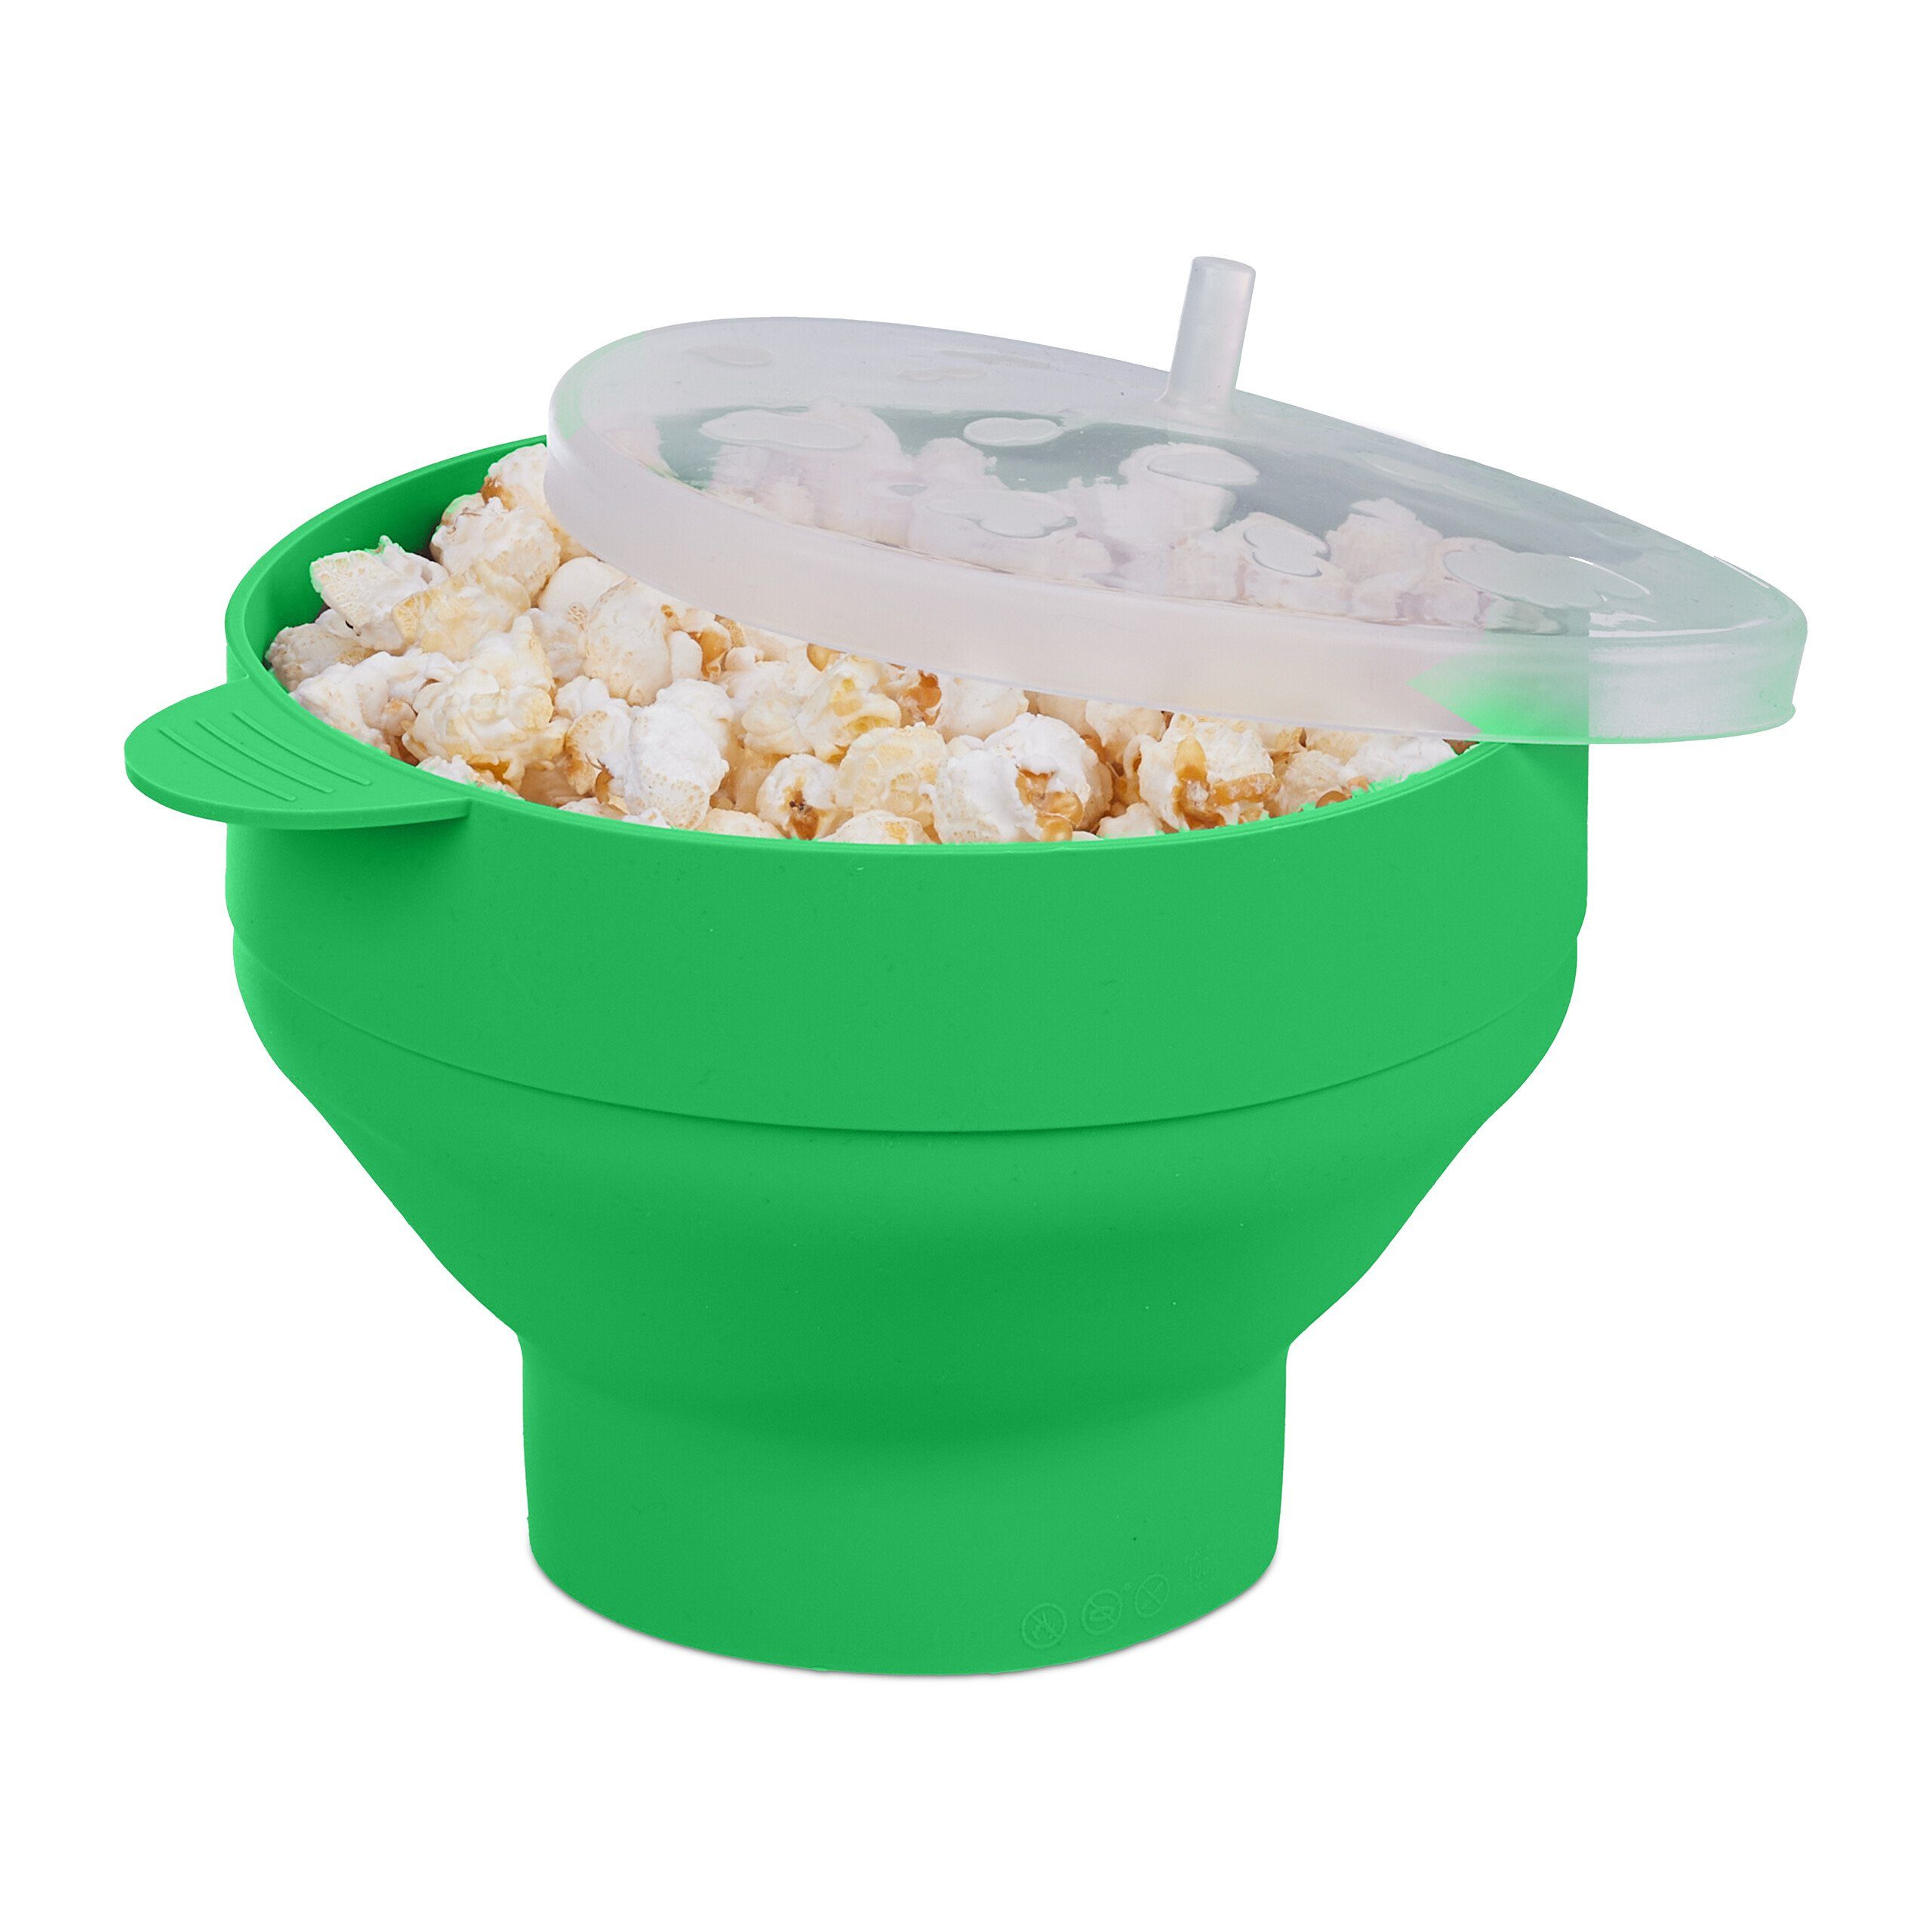 relaxdays Schüssel Popcorn Maker für Mikrowelle, Silikon, Grün Grün Transparent